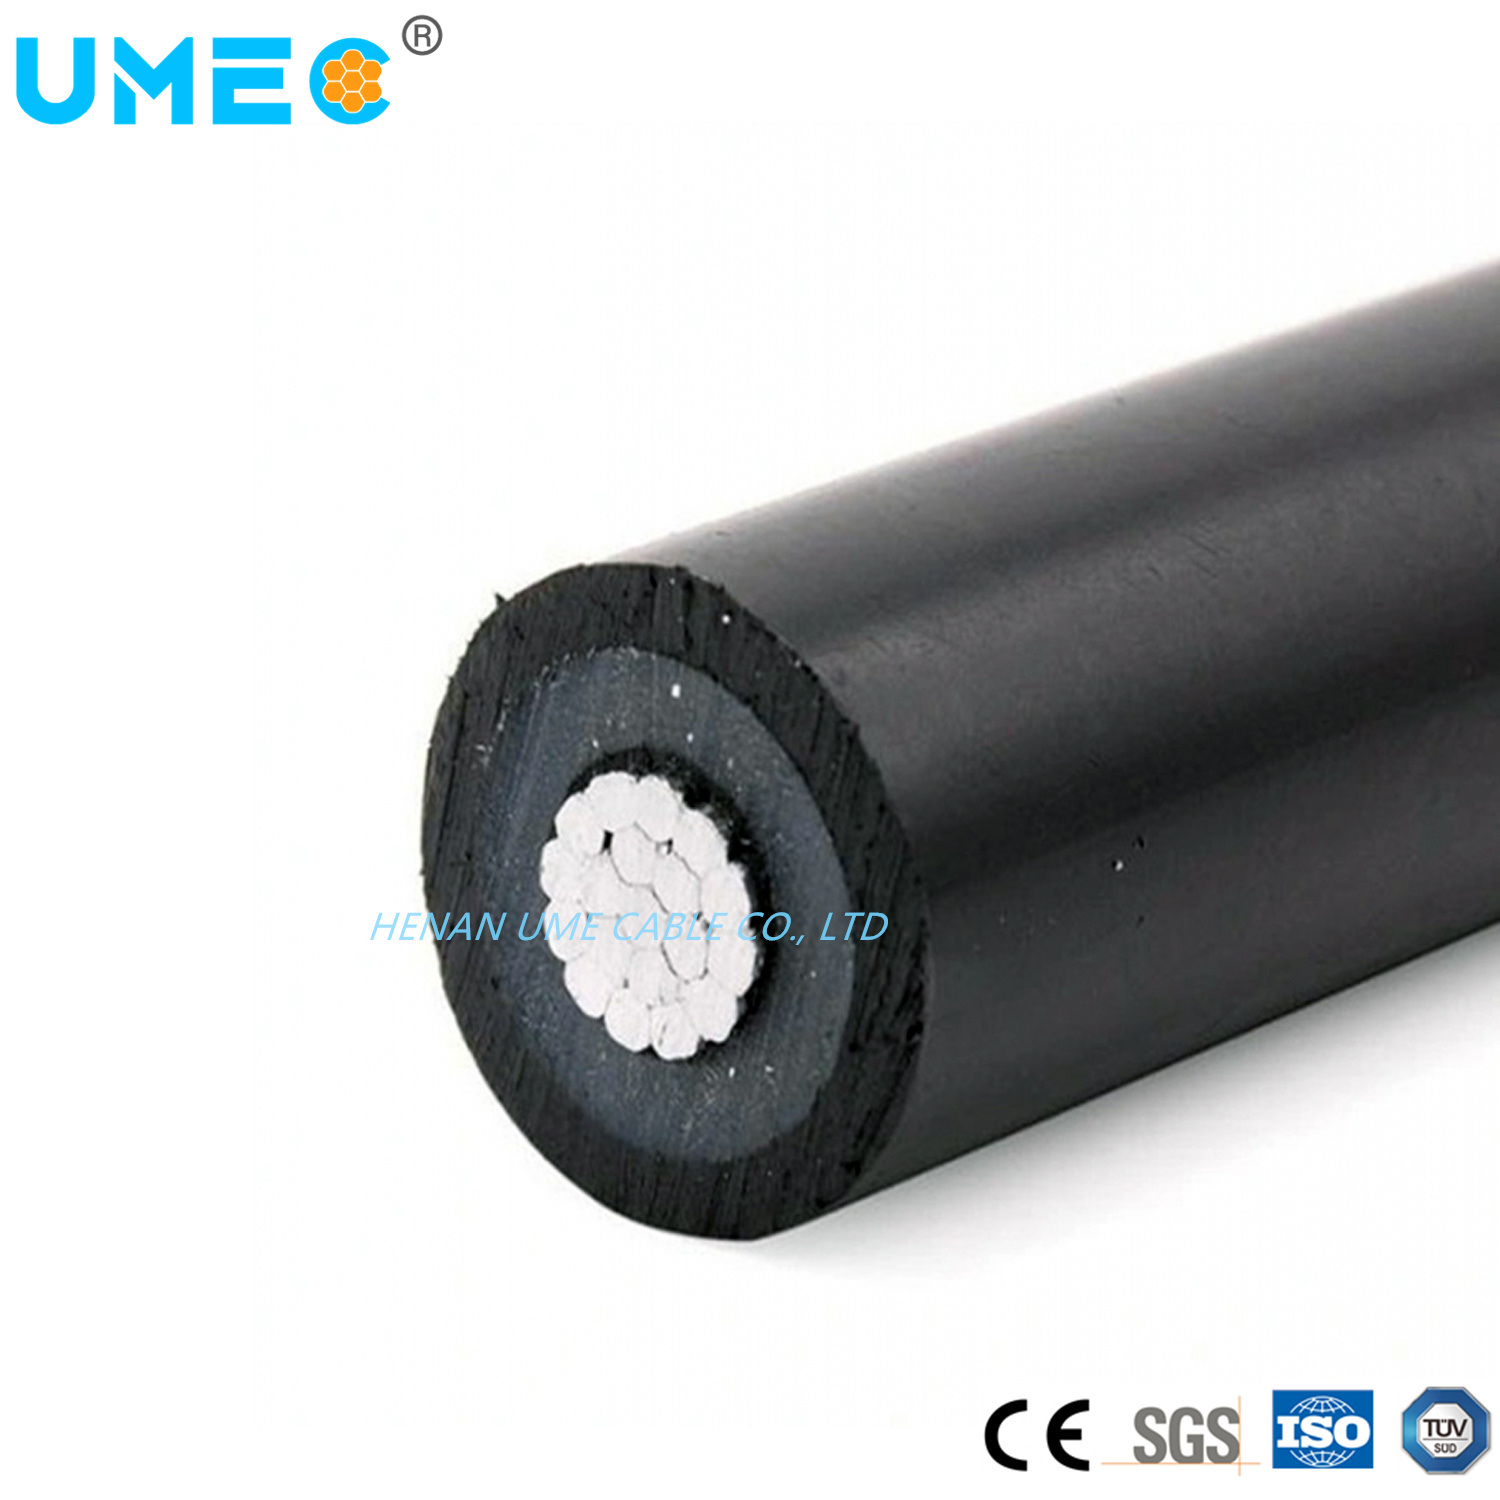 Manufacturer Factory Direct Ume Brand Medium Voltage ABC Cable